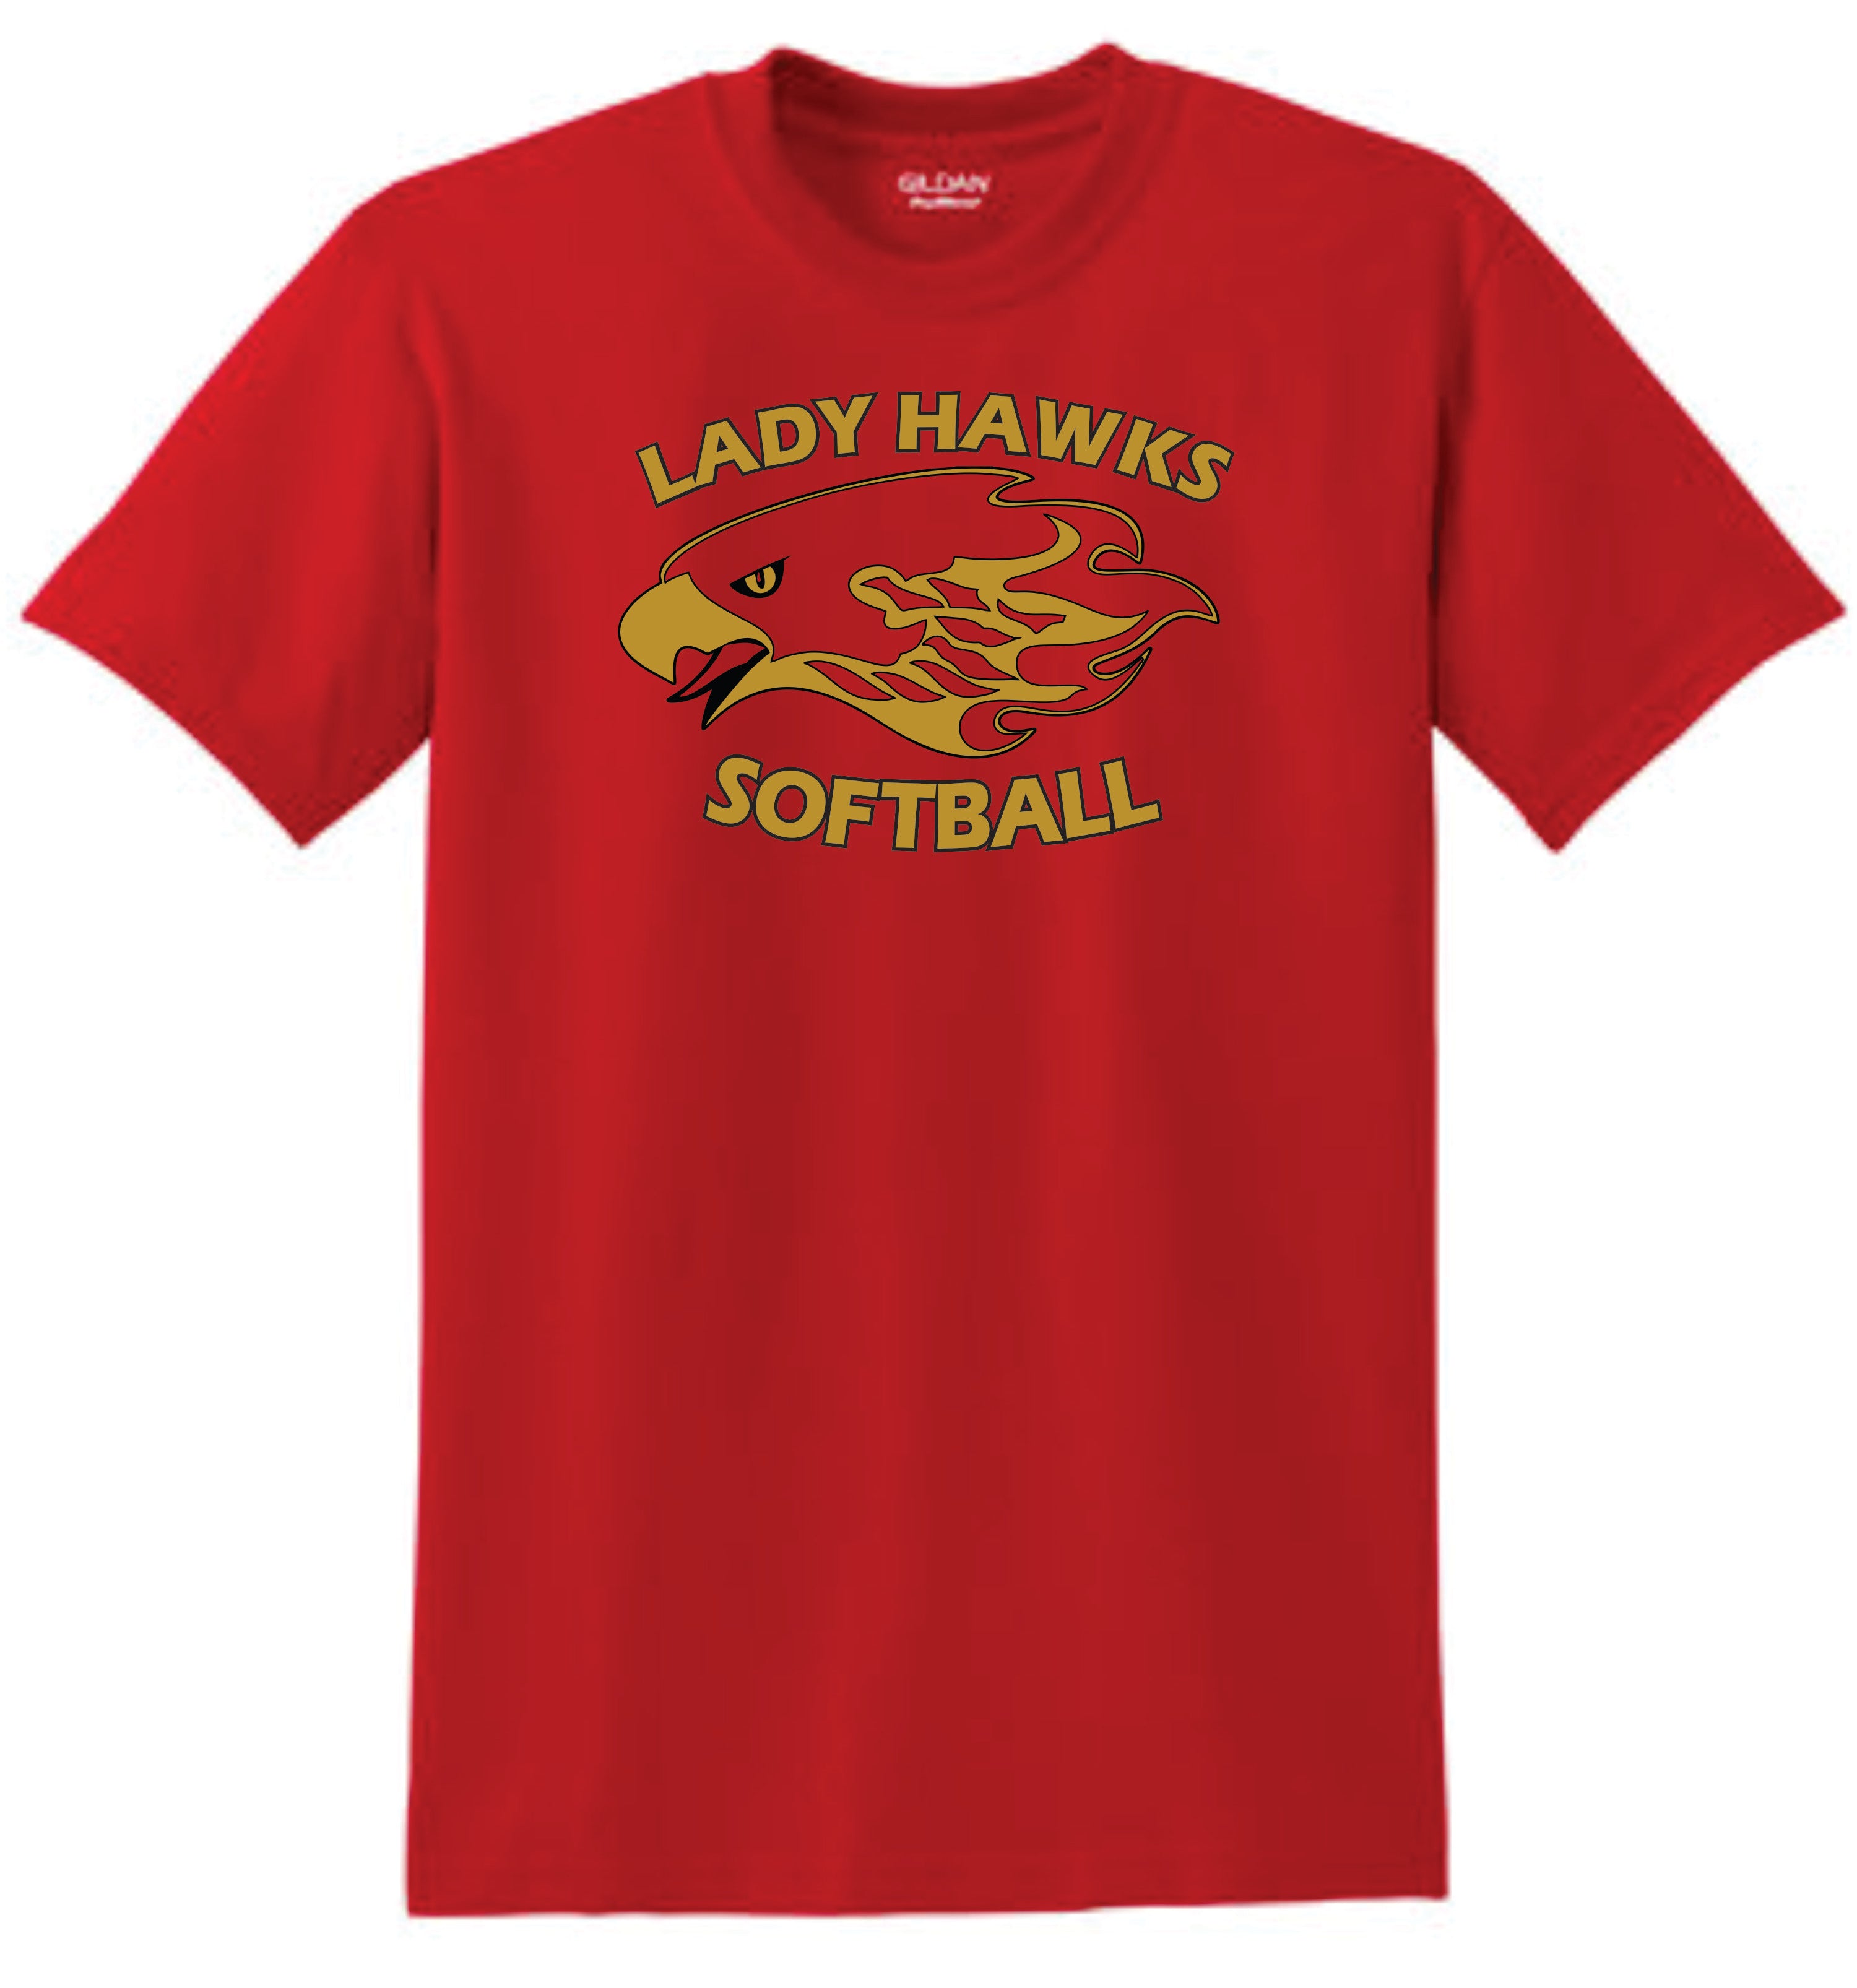 Rossview Hawks Softball Tee